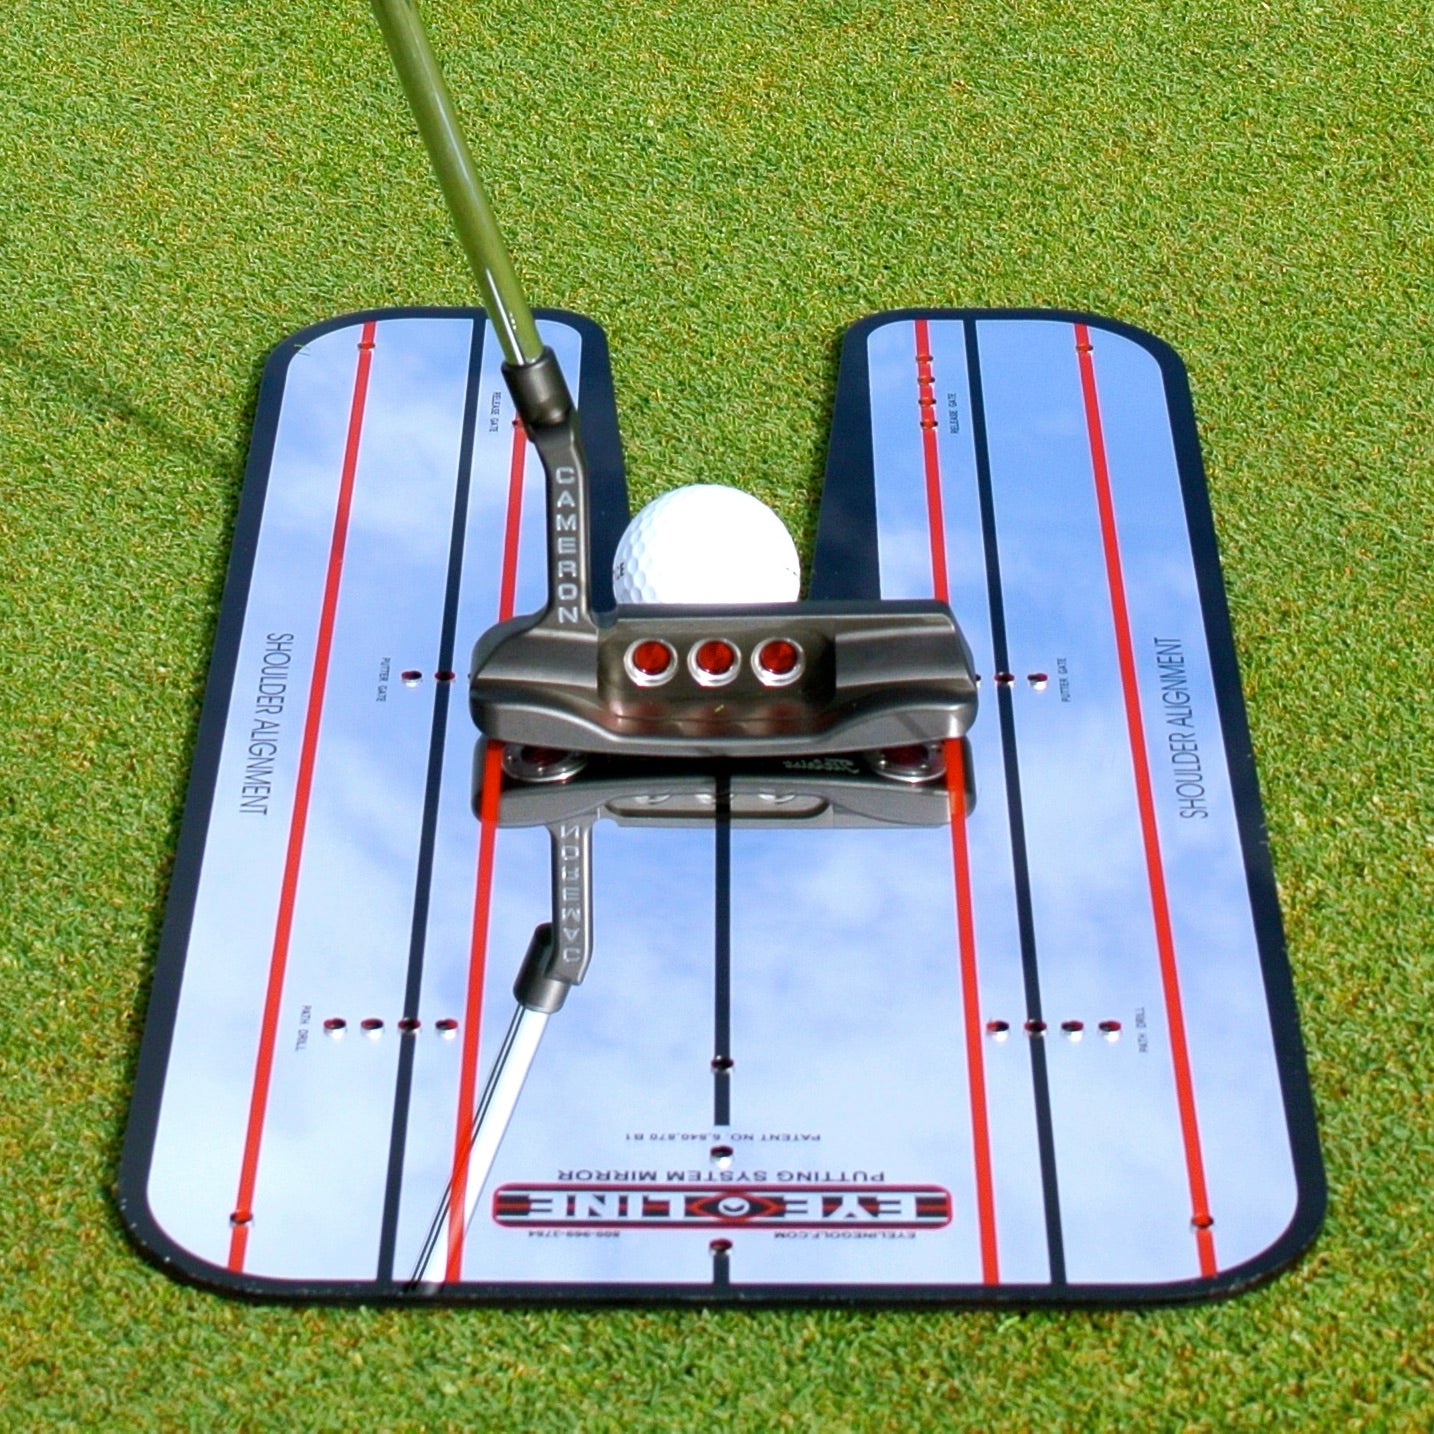 EyeLine Putting Mirror (Large) – Golf